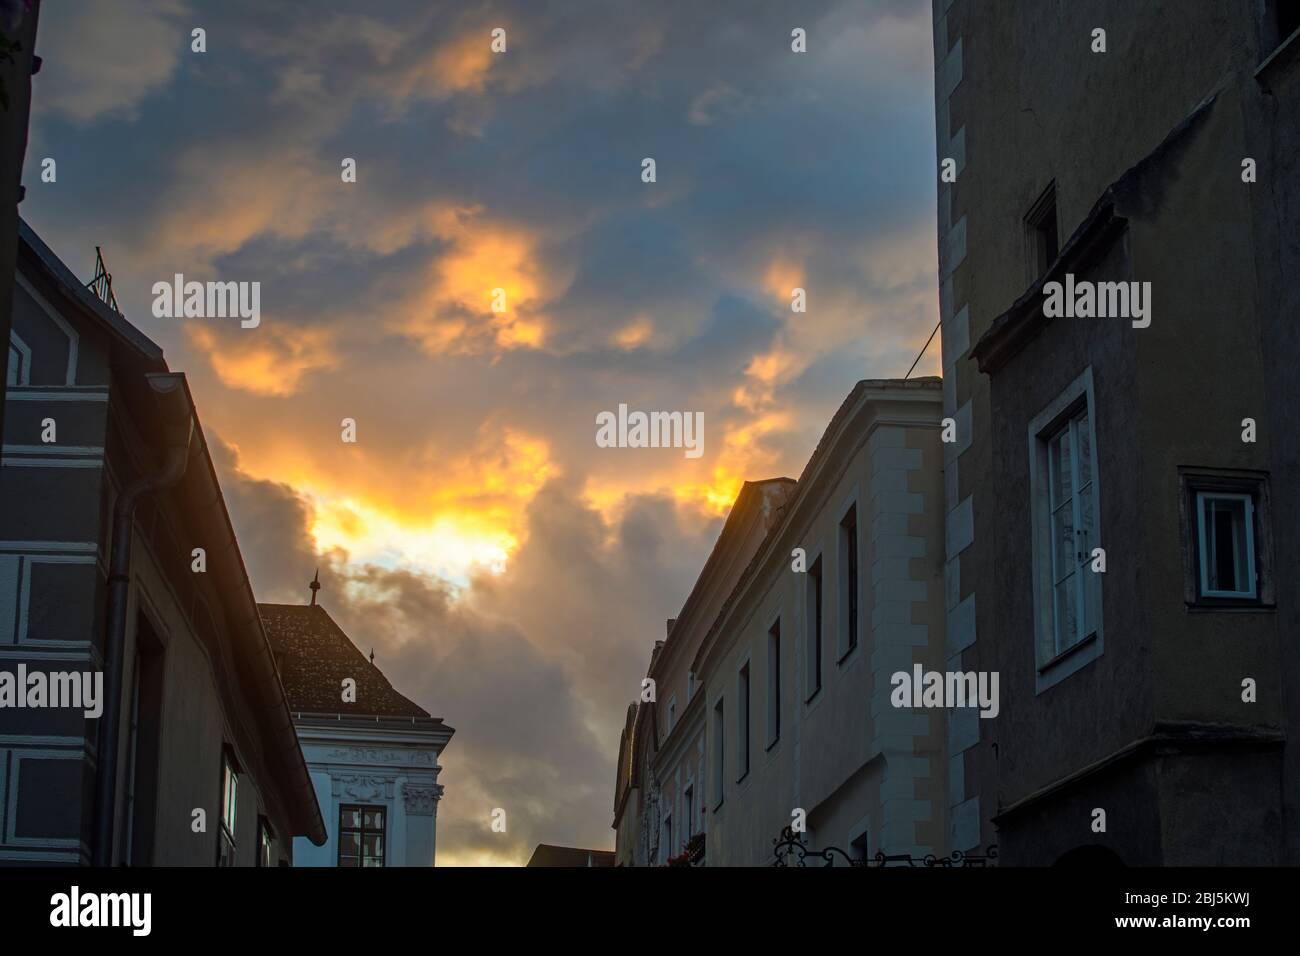 Street scenes in the small town at dusk, Stein/Krems, Lower Austria, Austria Stock Photo